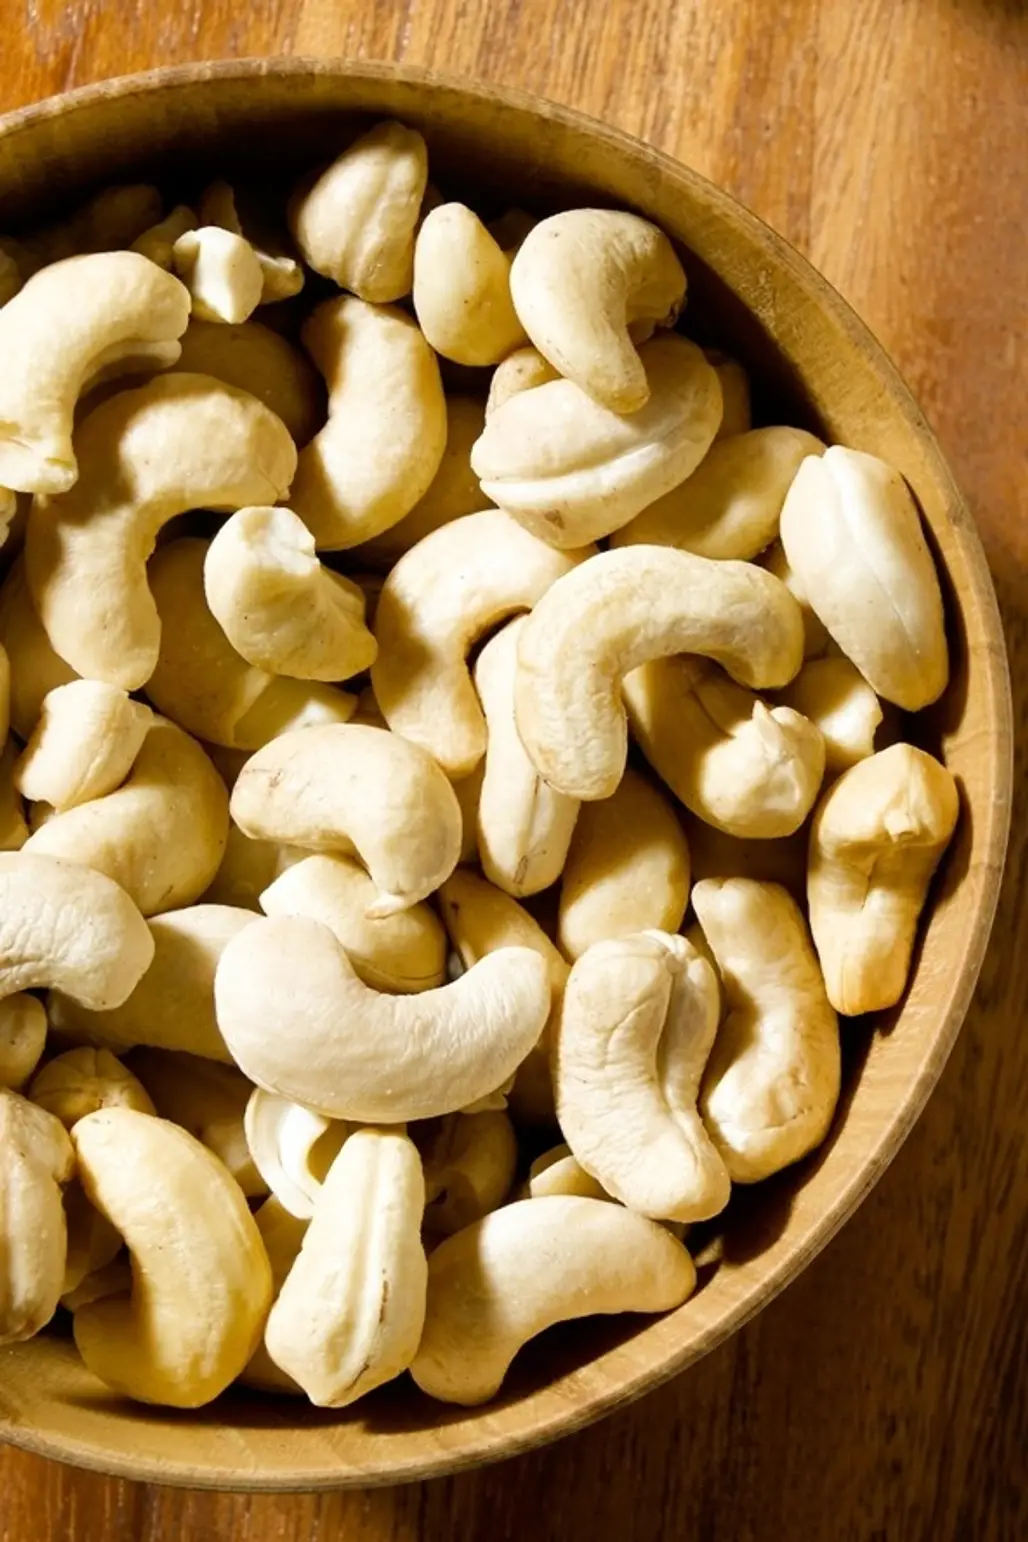 Cashew Nuts